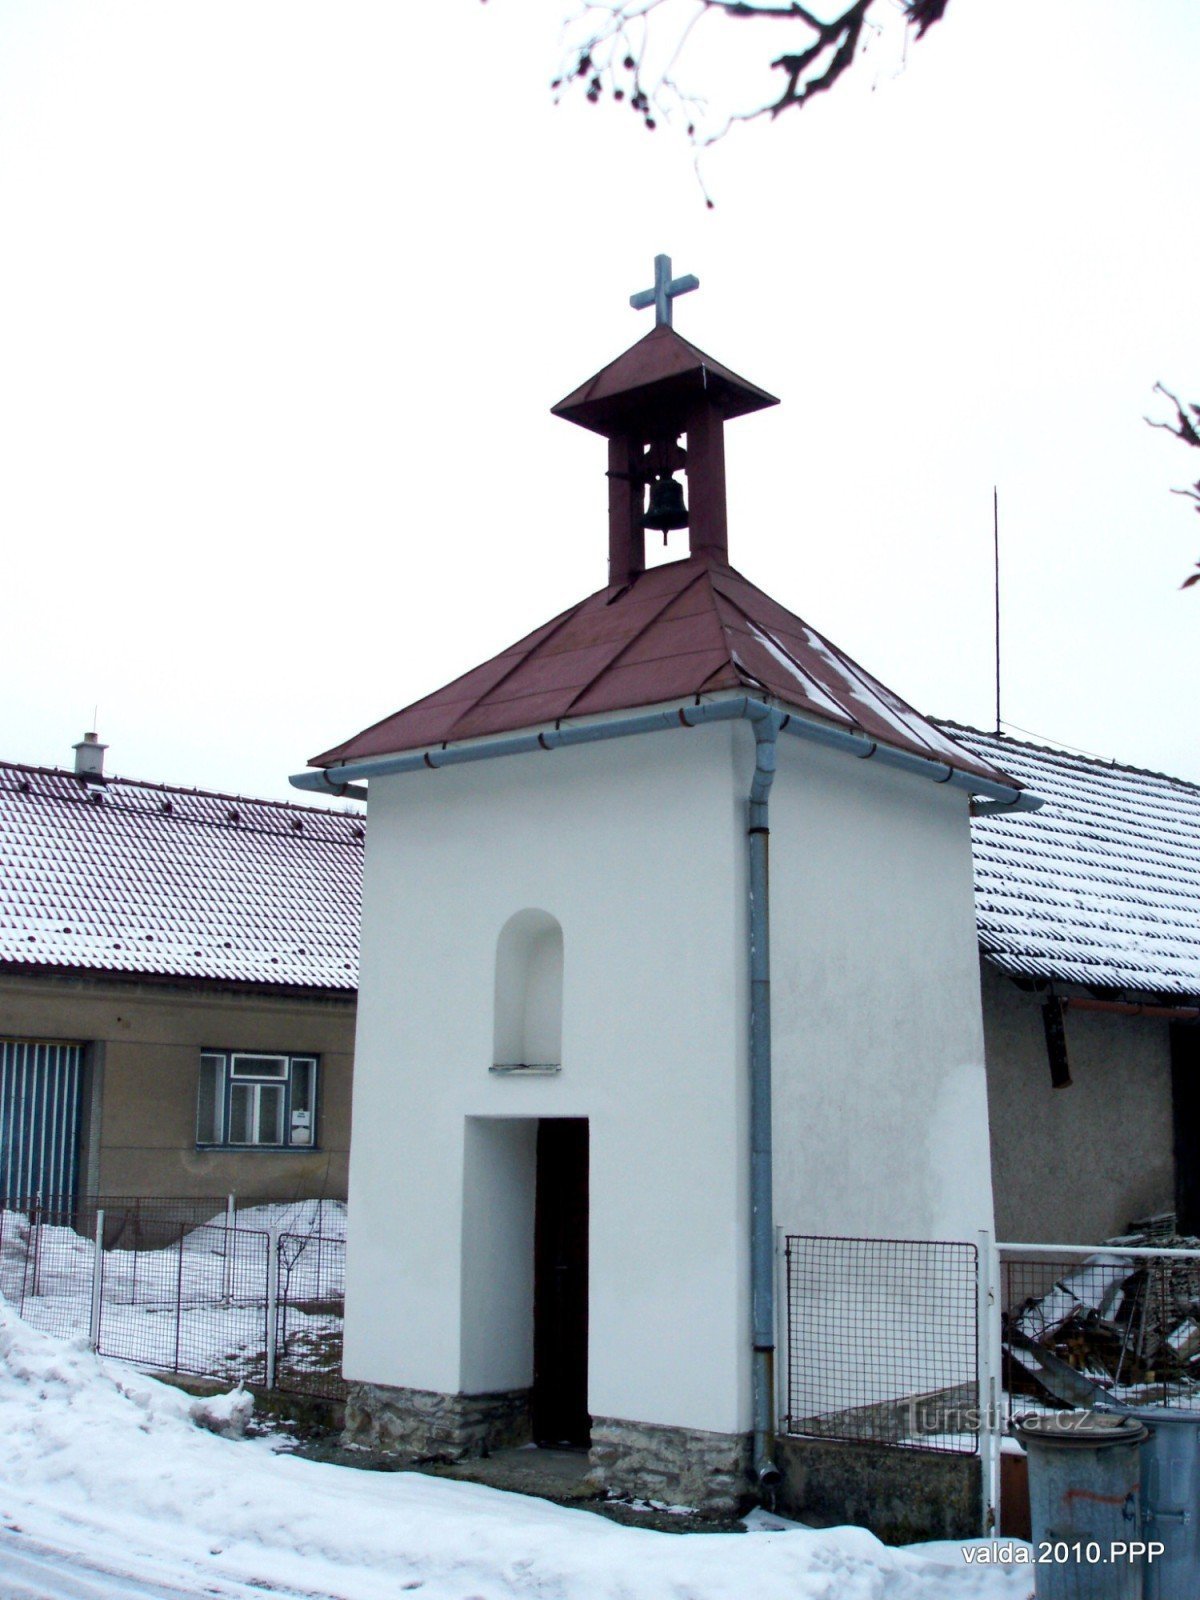 Skrivánkov - bell tower